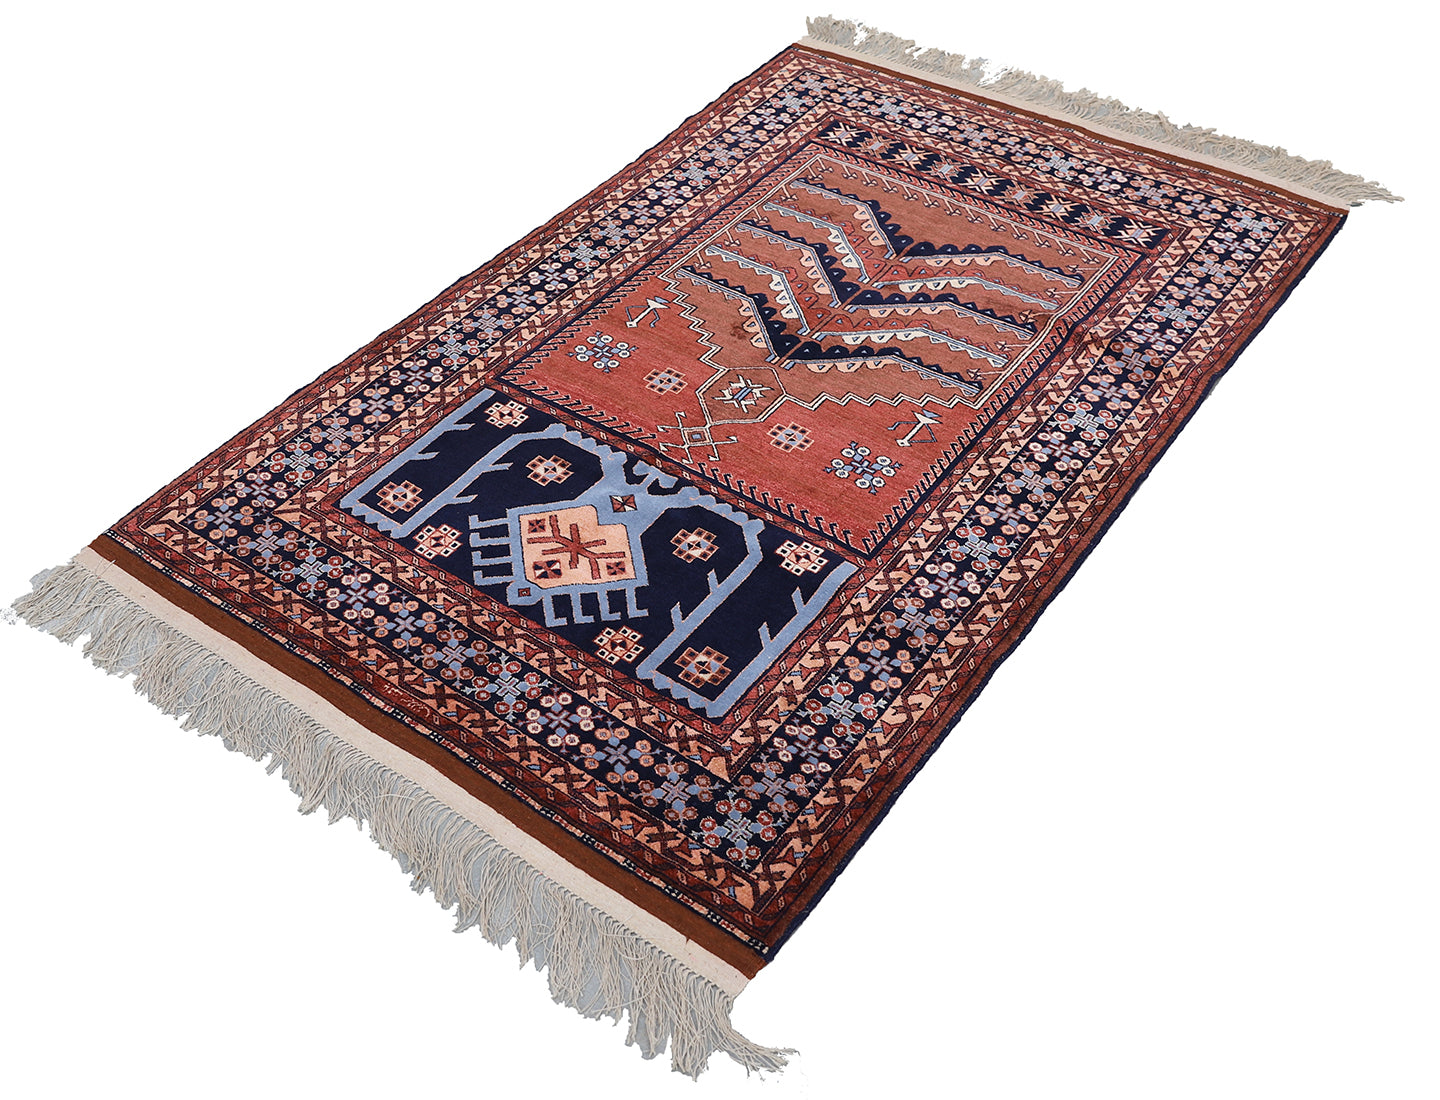 4'x6' Wool and Silk Anatolian Design Prayer Rug Afghan